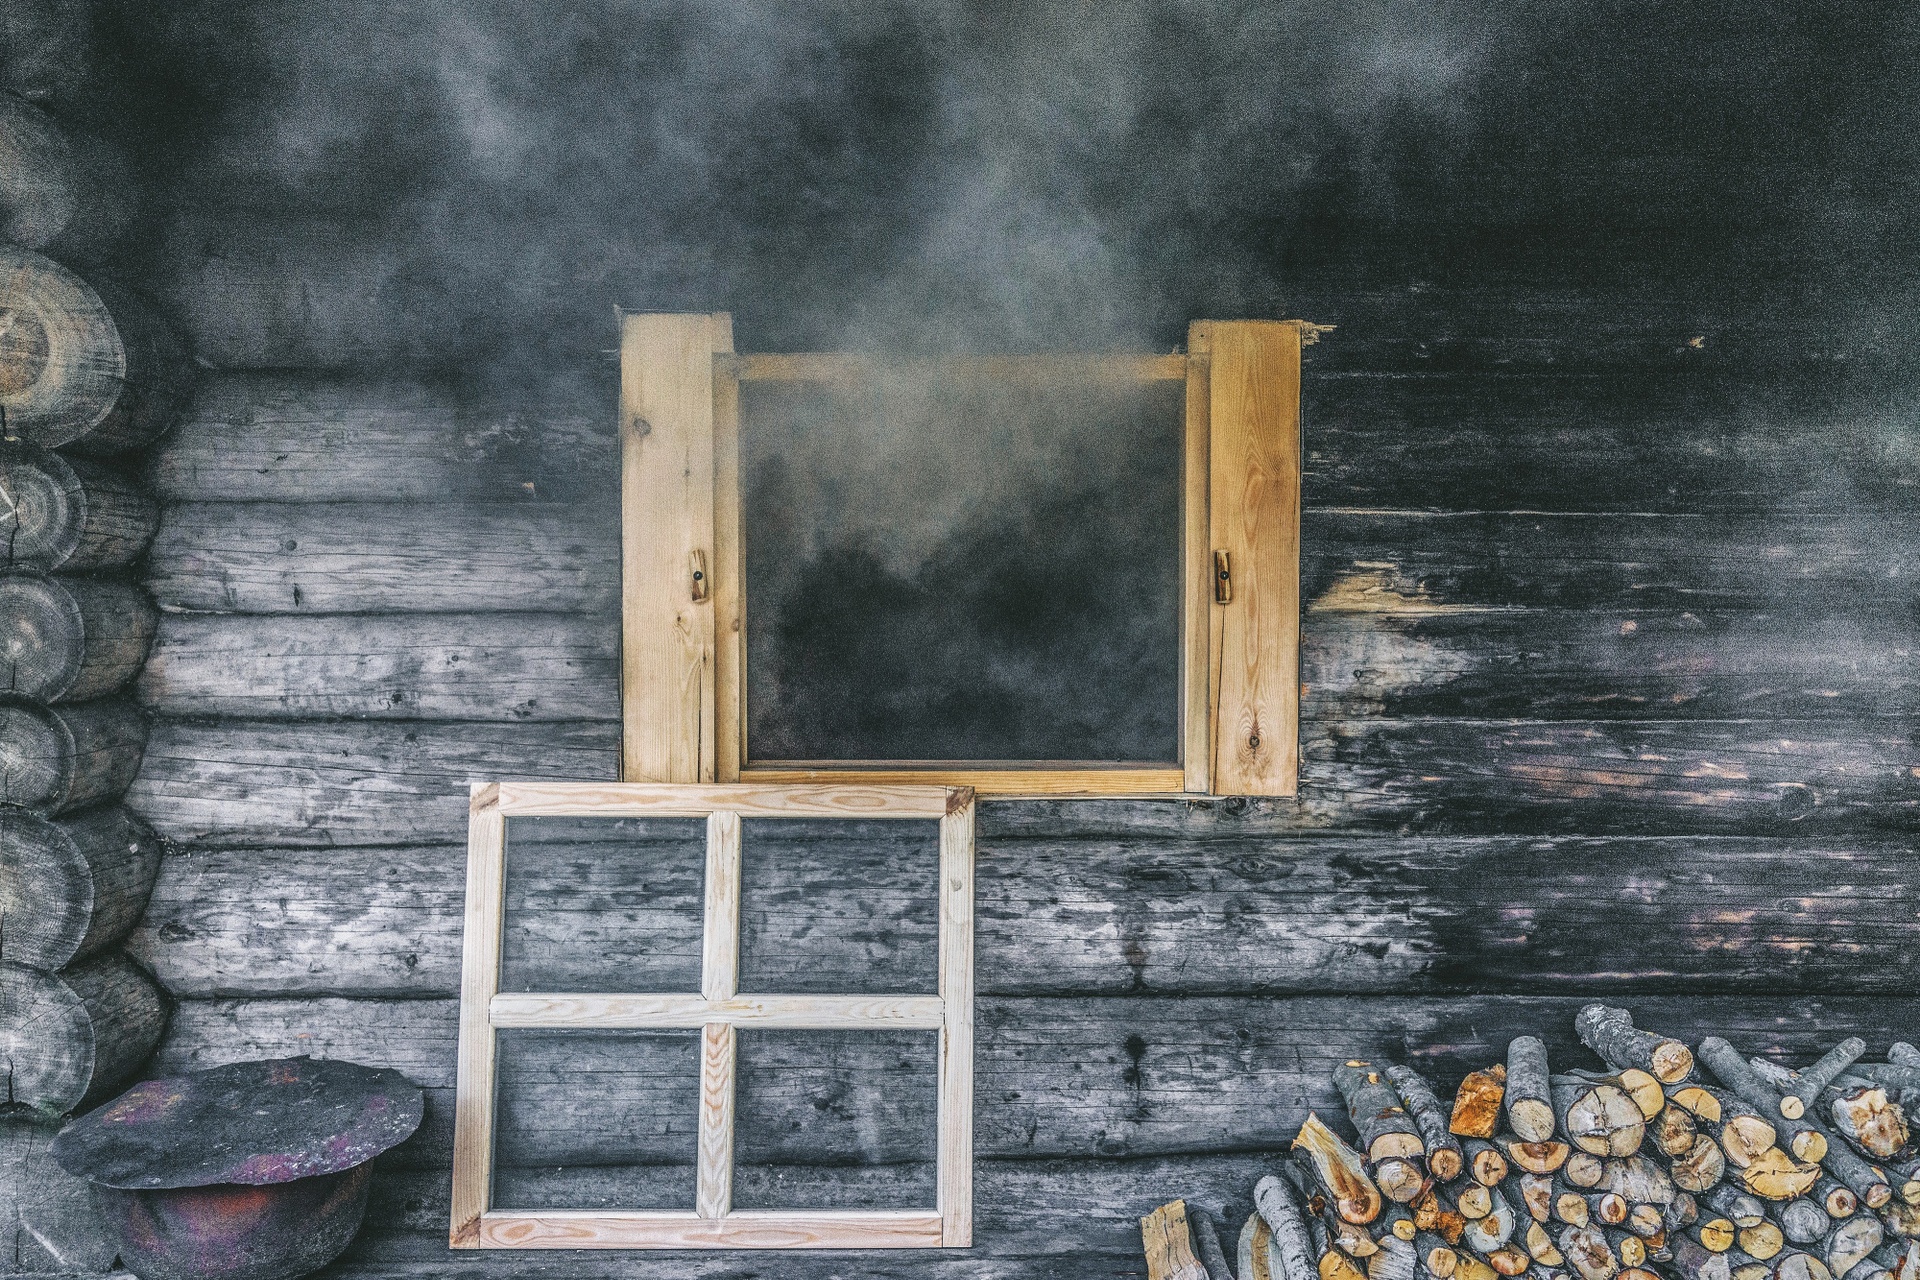 Smoke exiting a window of a smoke sauna in South Estonia